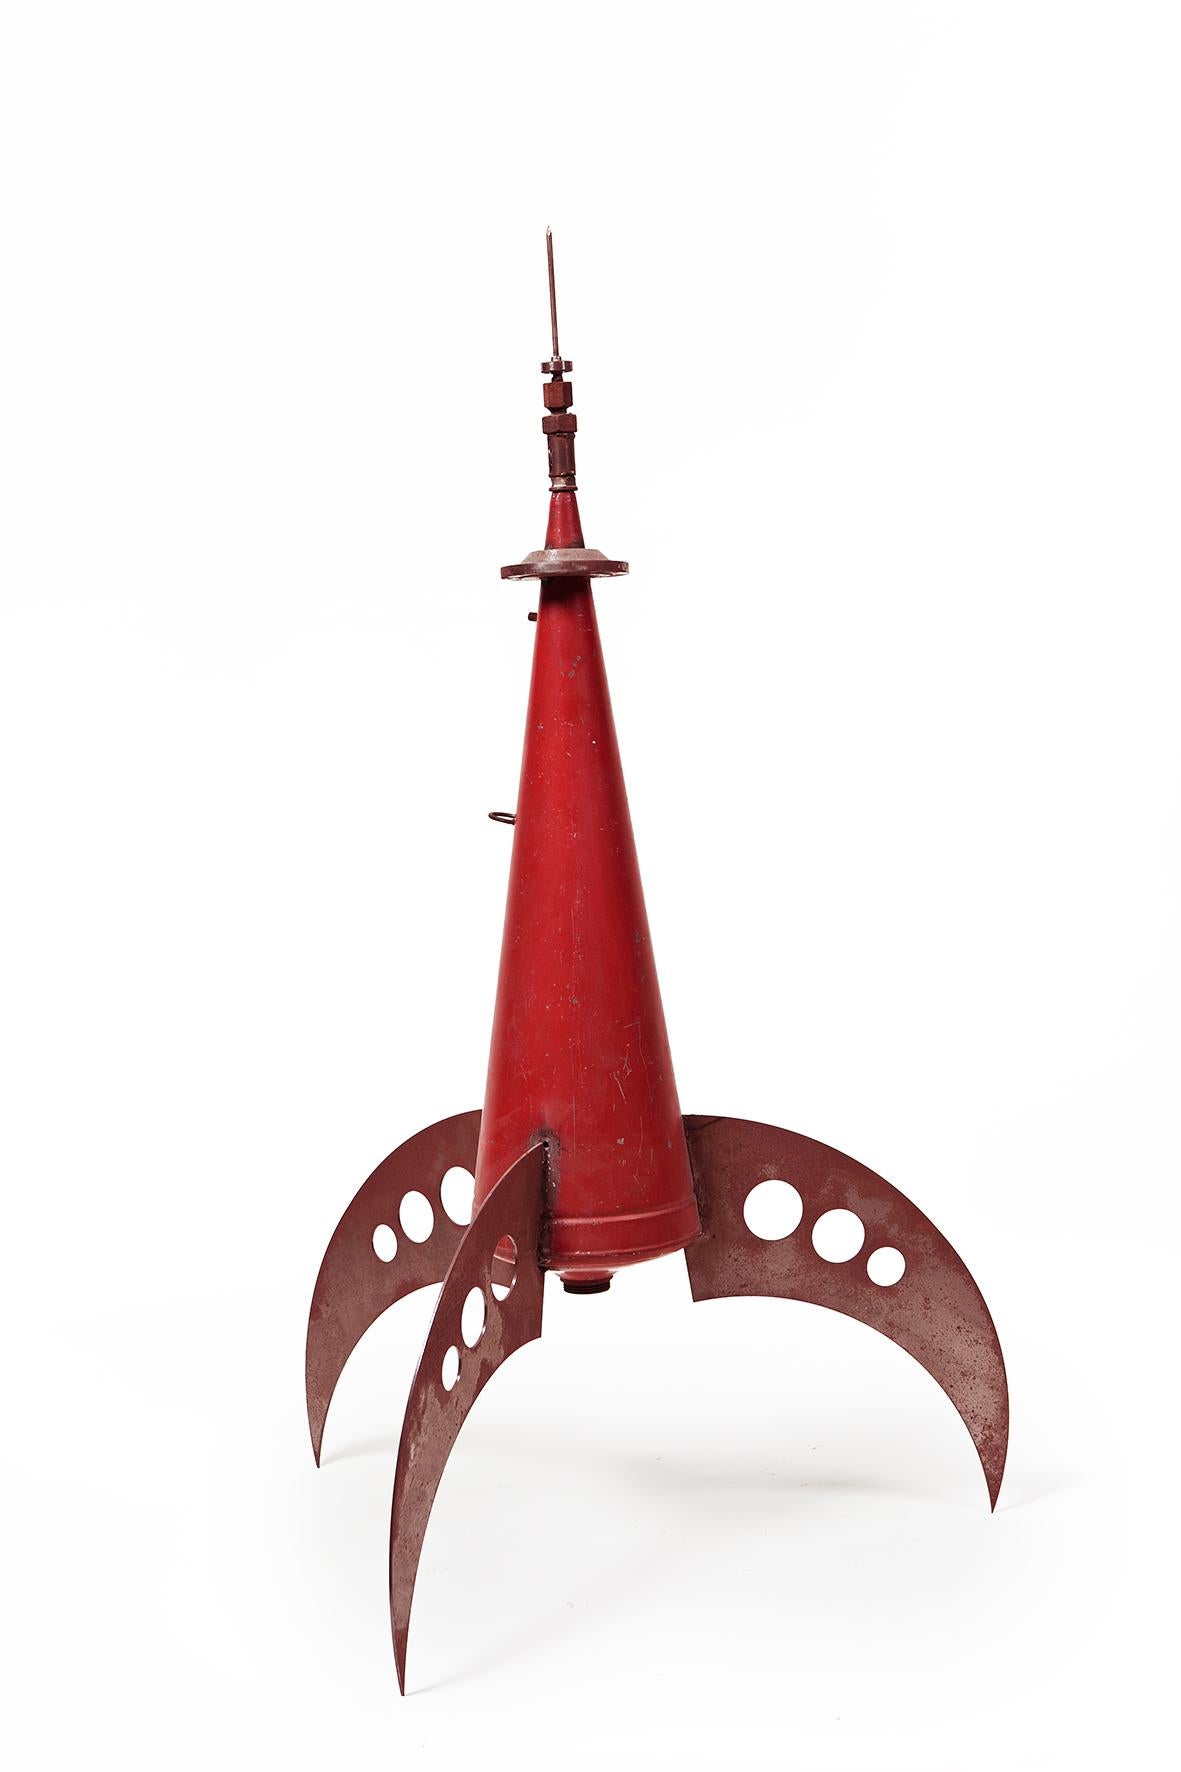 Miquel Aparici Figurative Sculpture - Cohete I - 21st Century, Contemporary Sculpture, Figurative, Recycled Objects